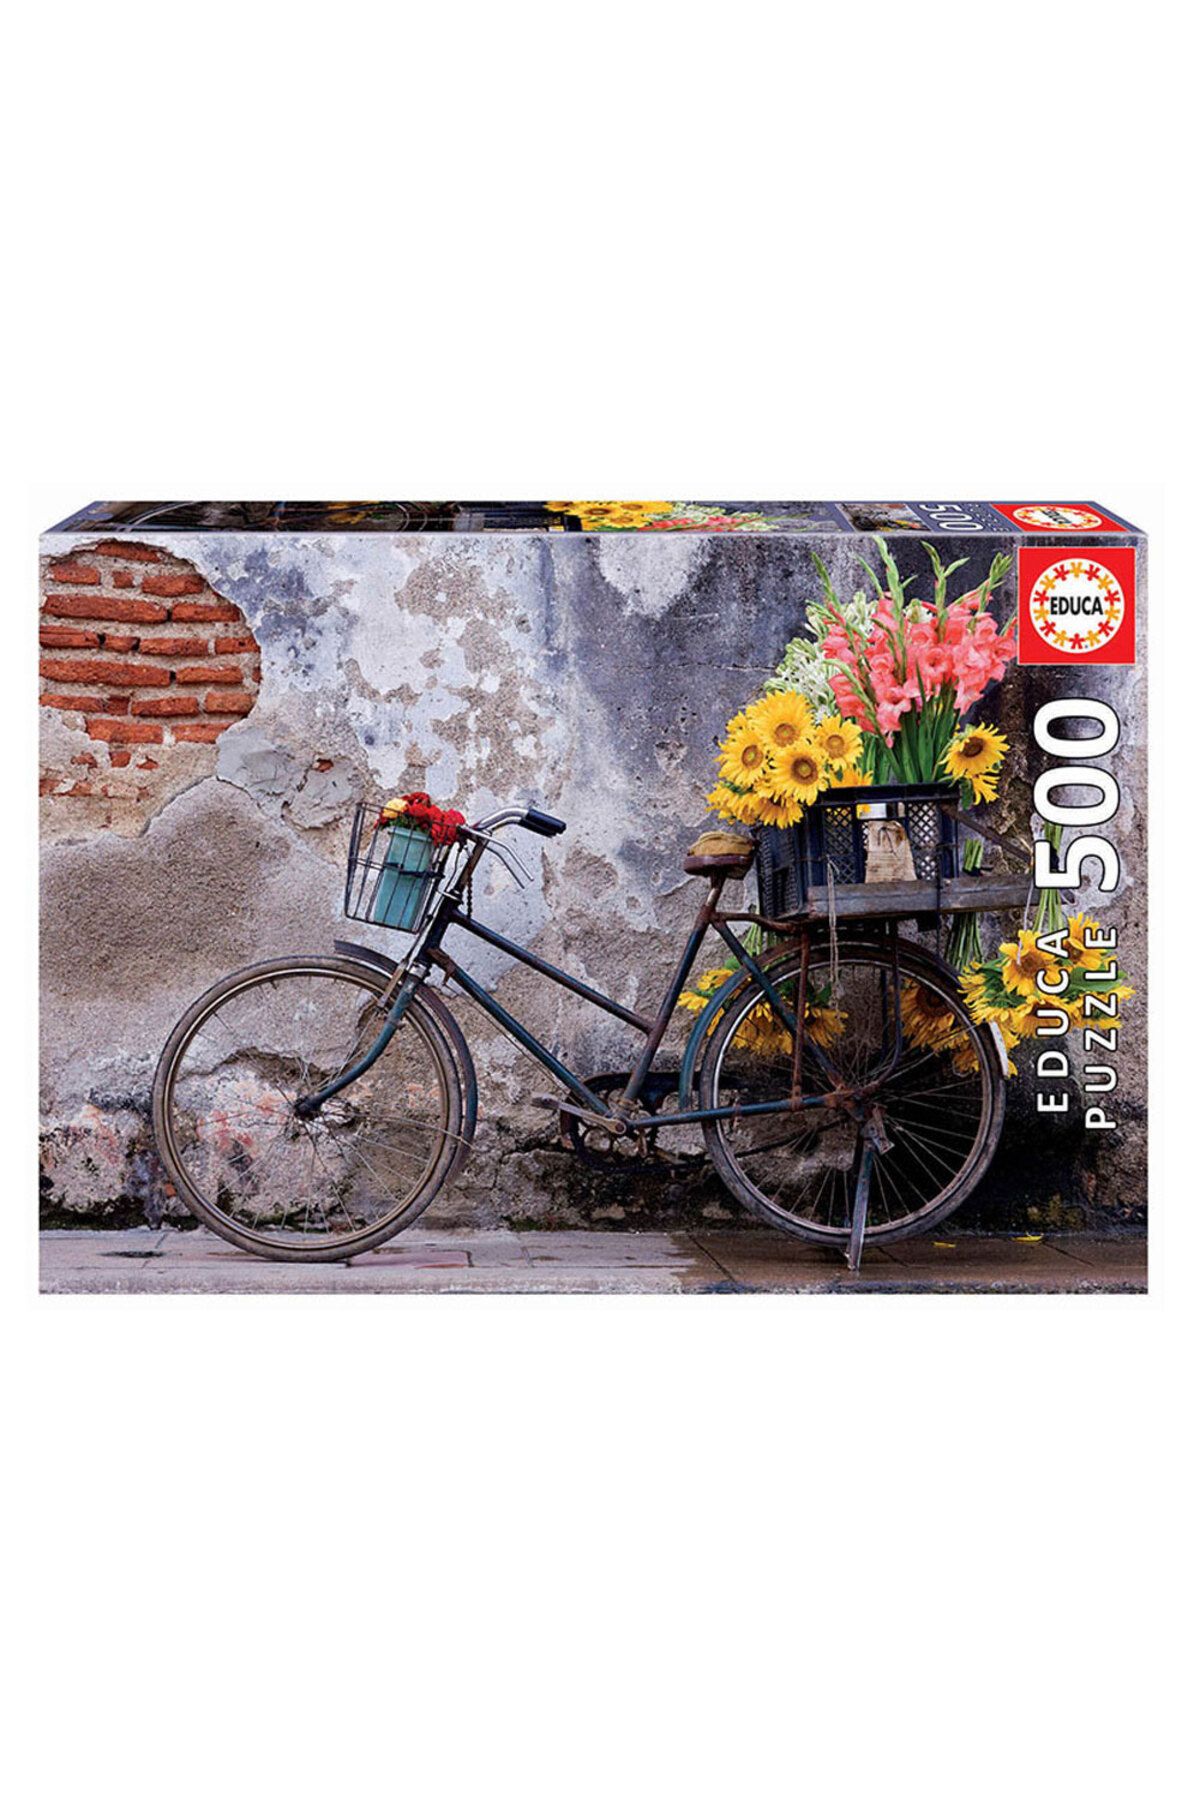 EDUCA Puzzle 500 Parça Çiçekli Bisiklet 17988